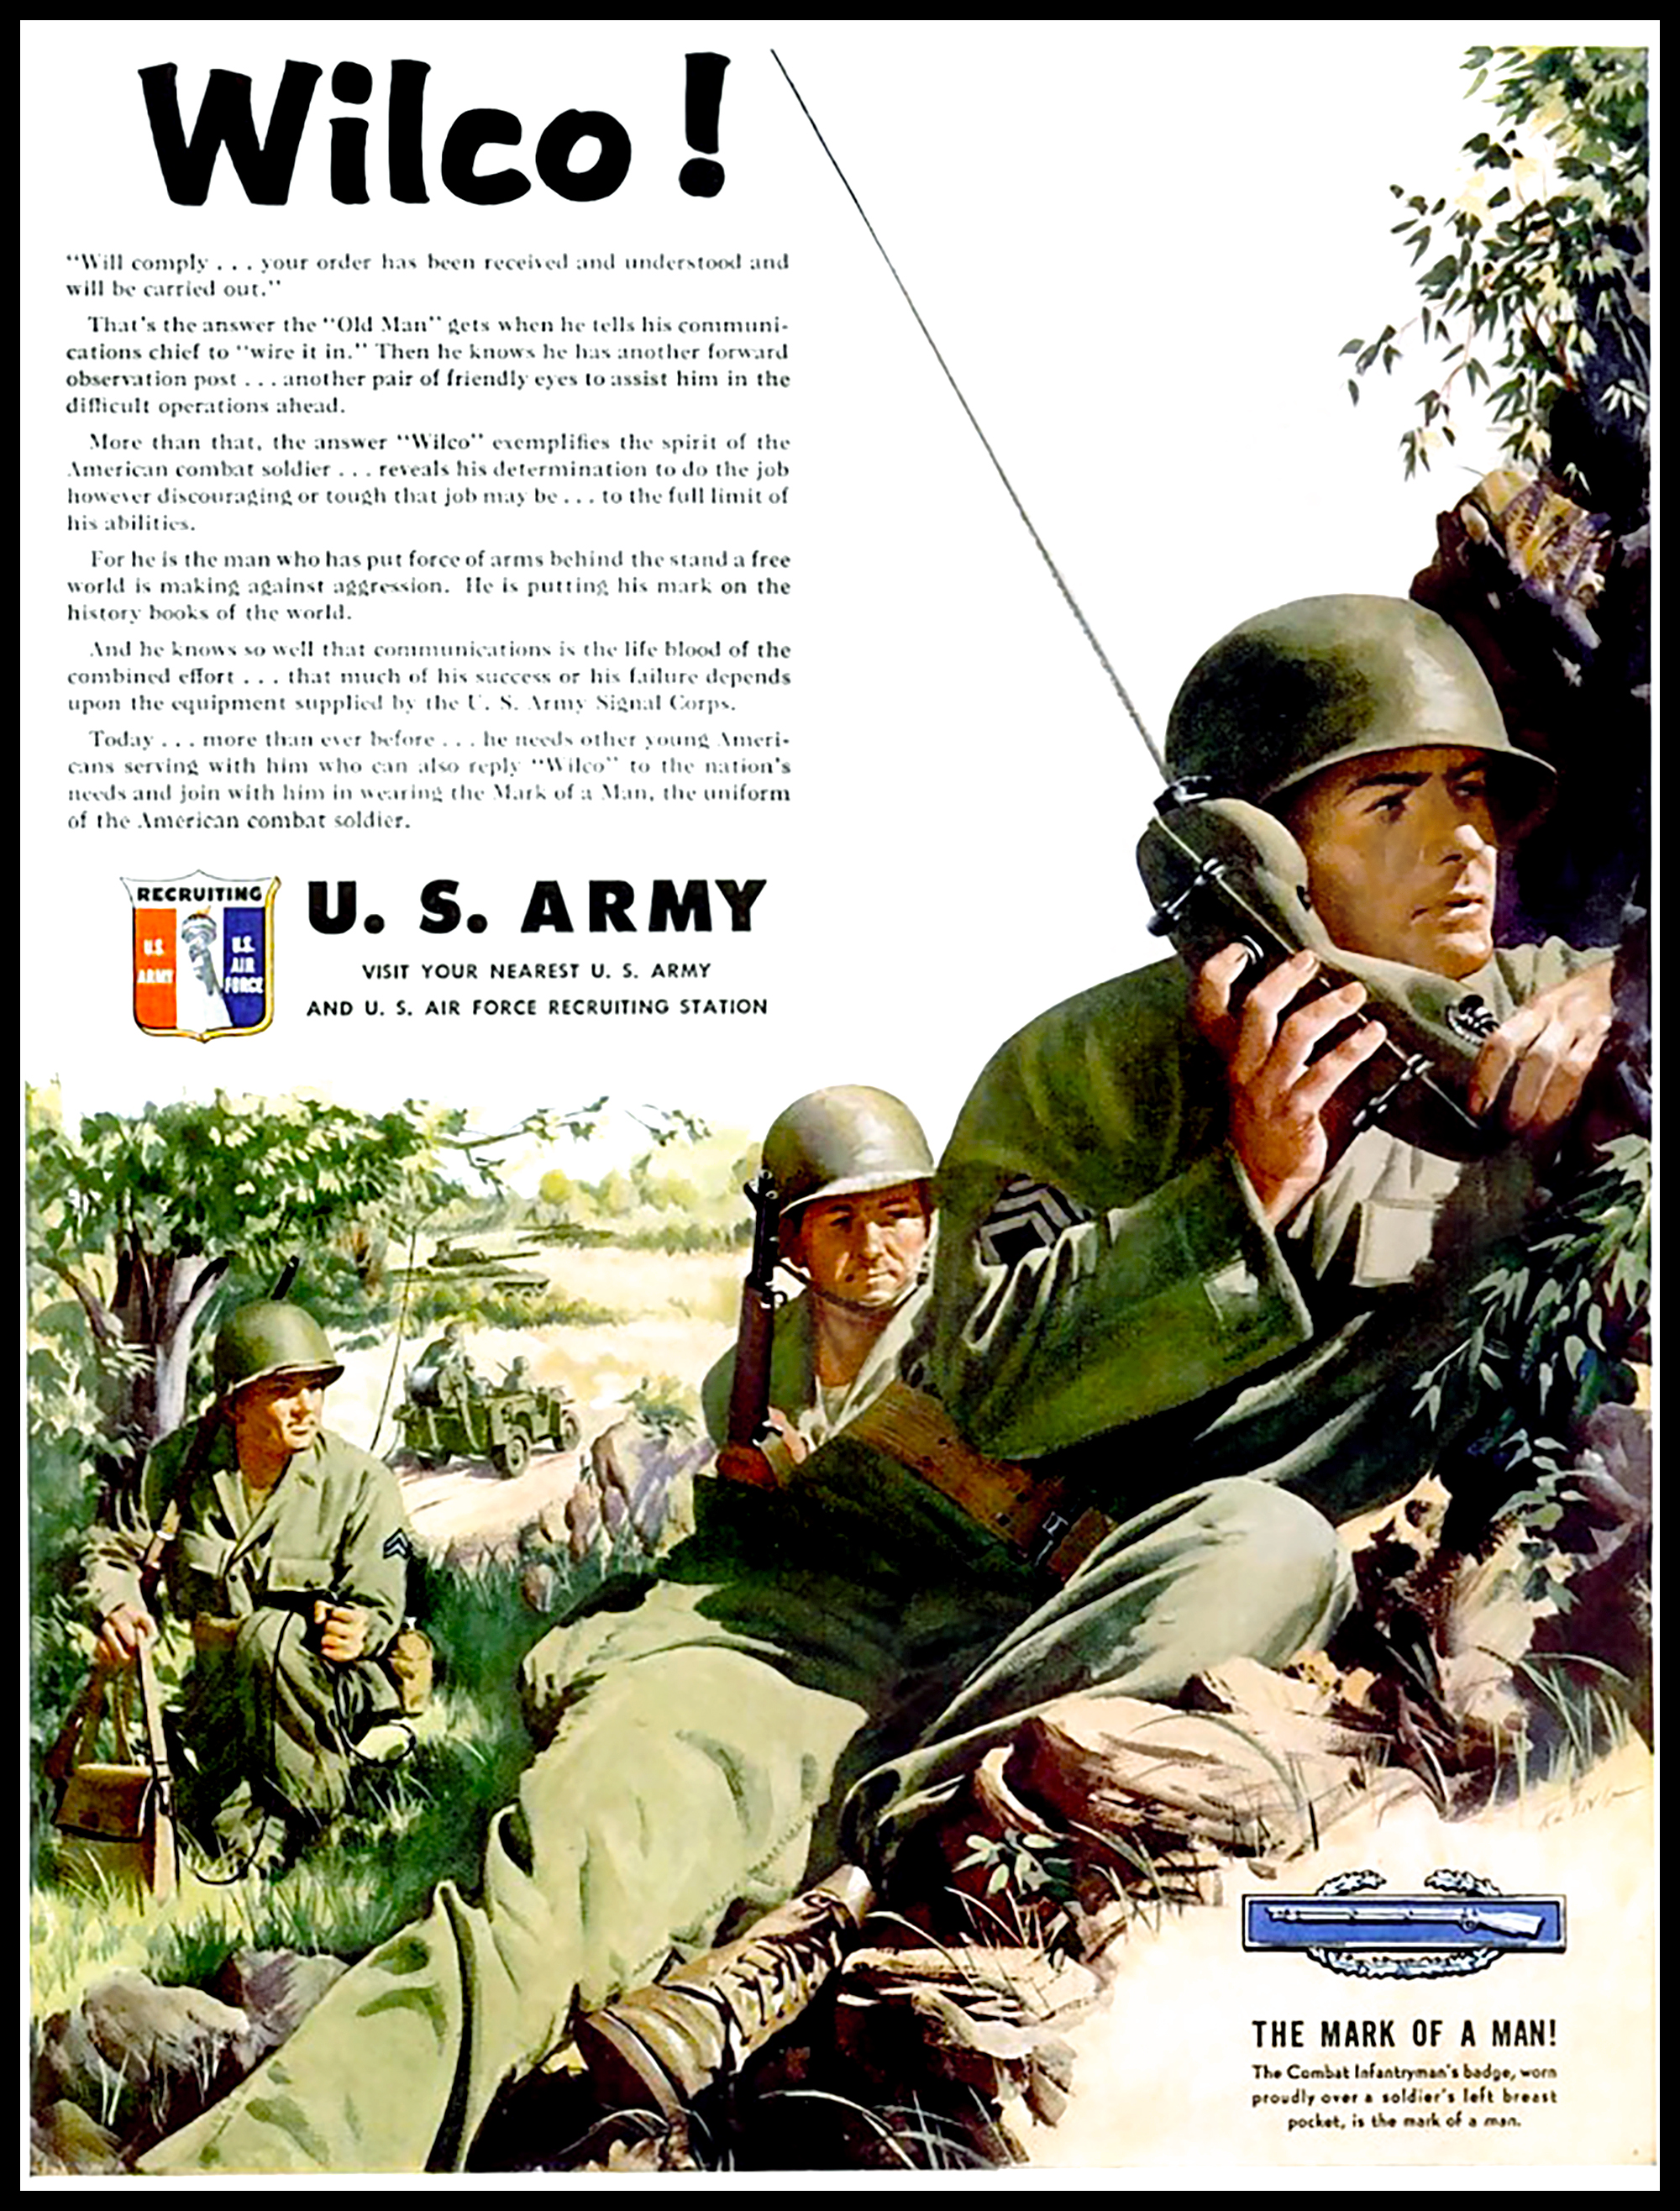 Korean War American Propaganda